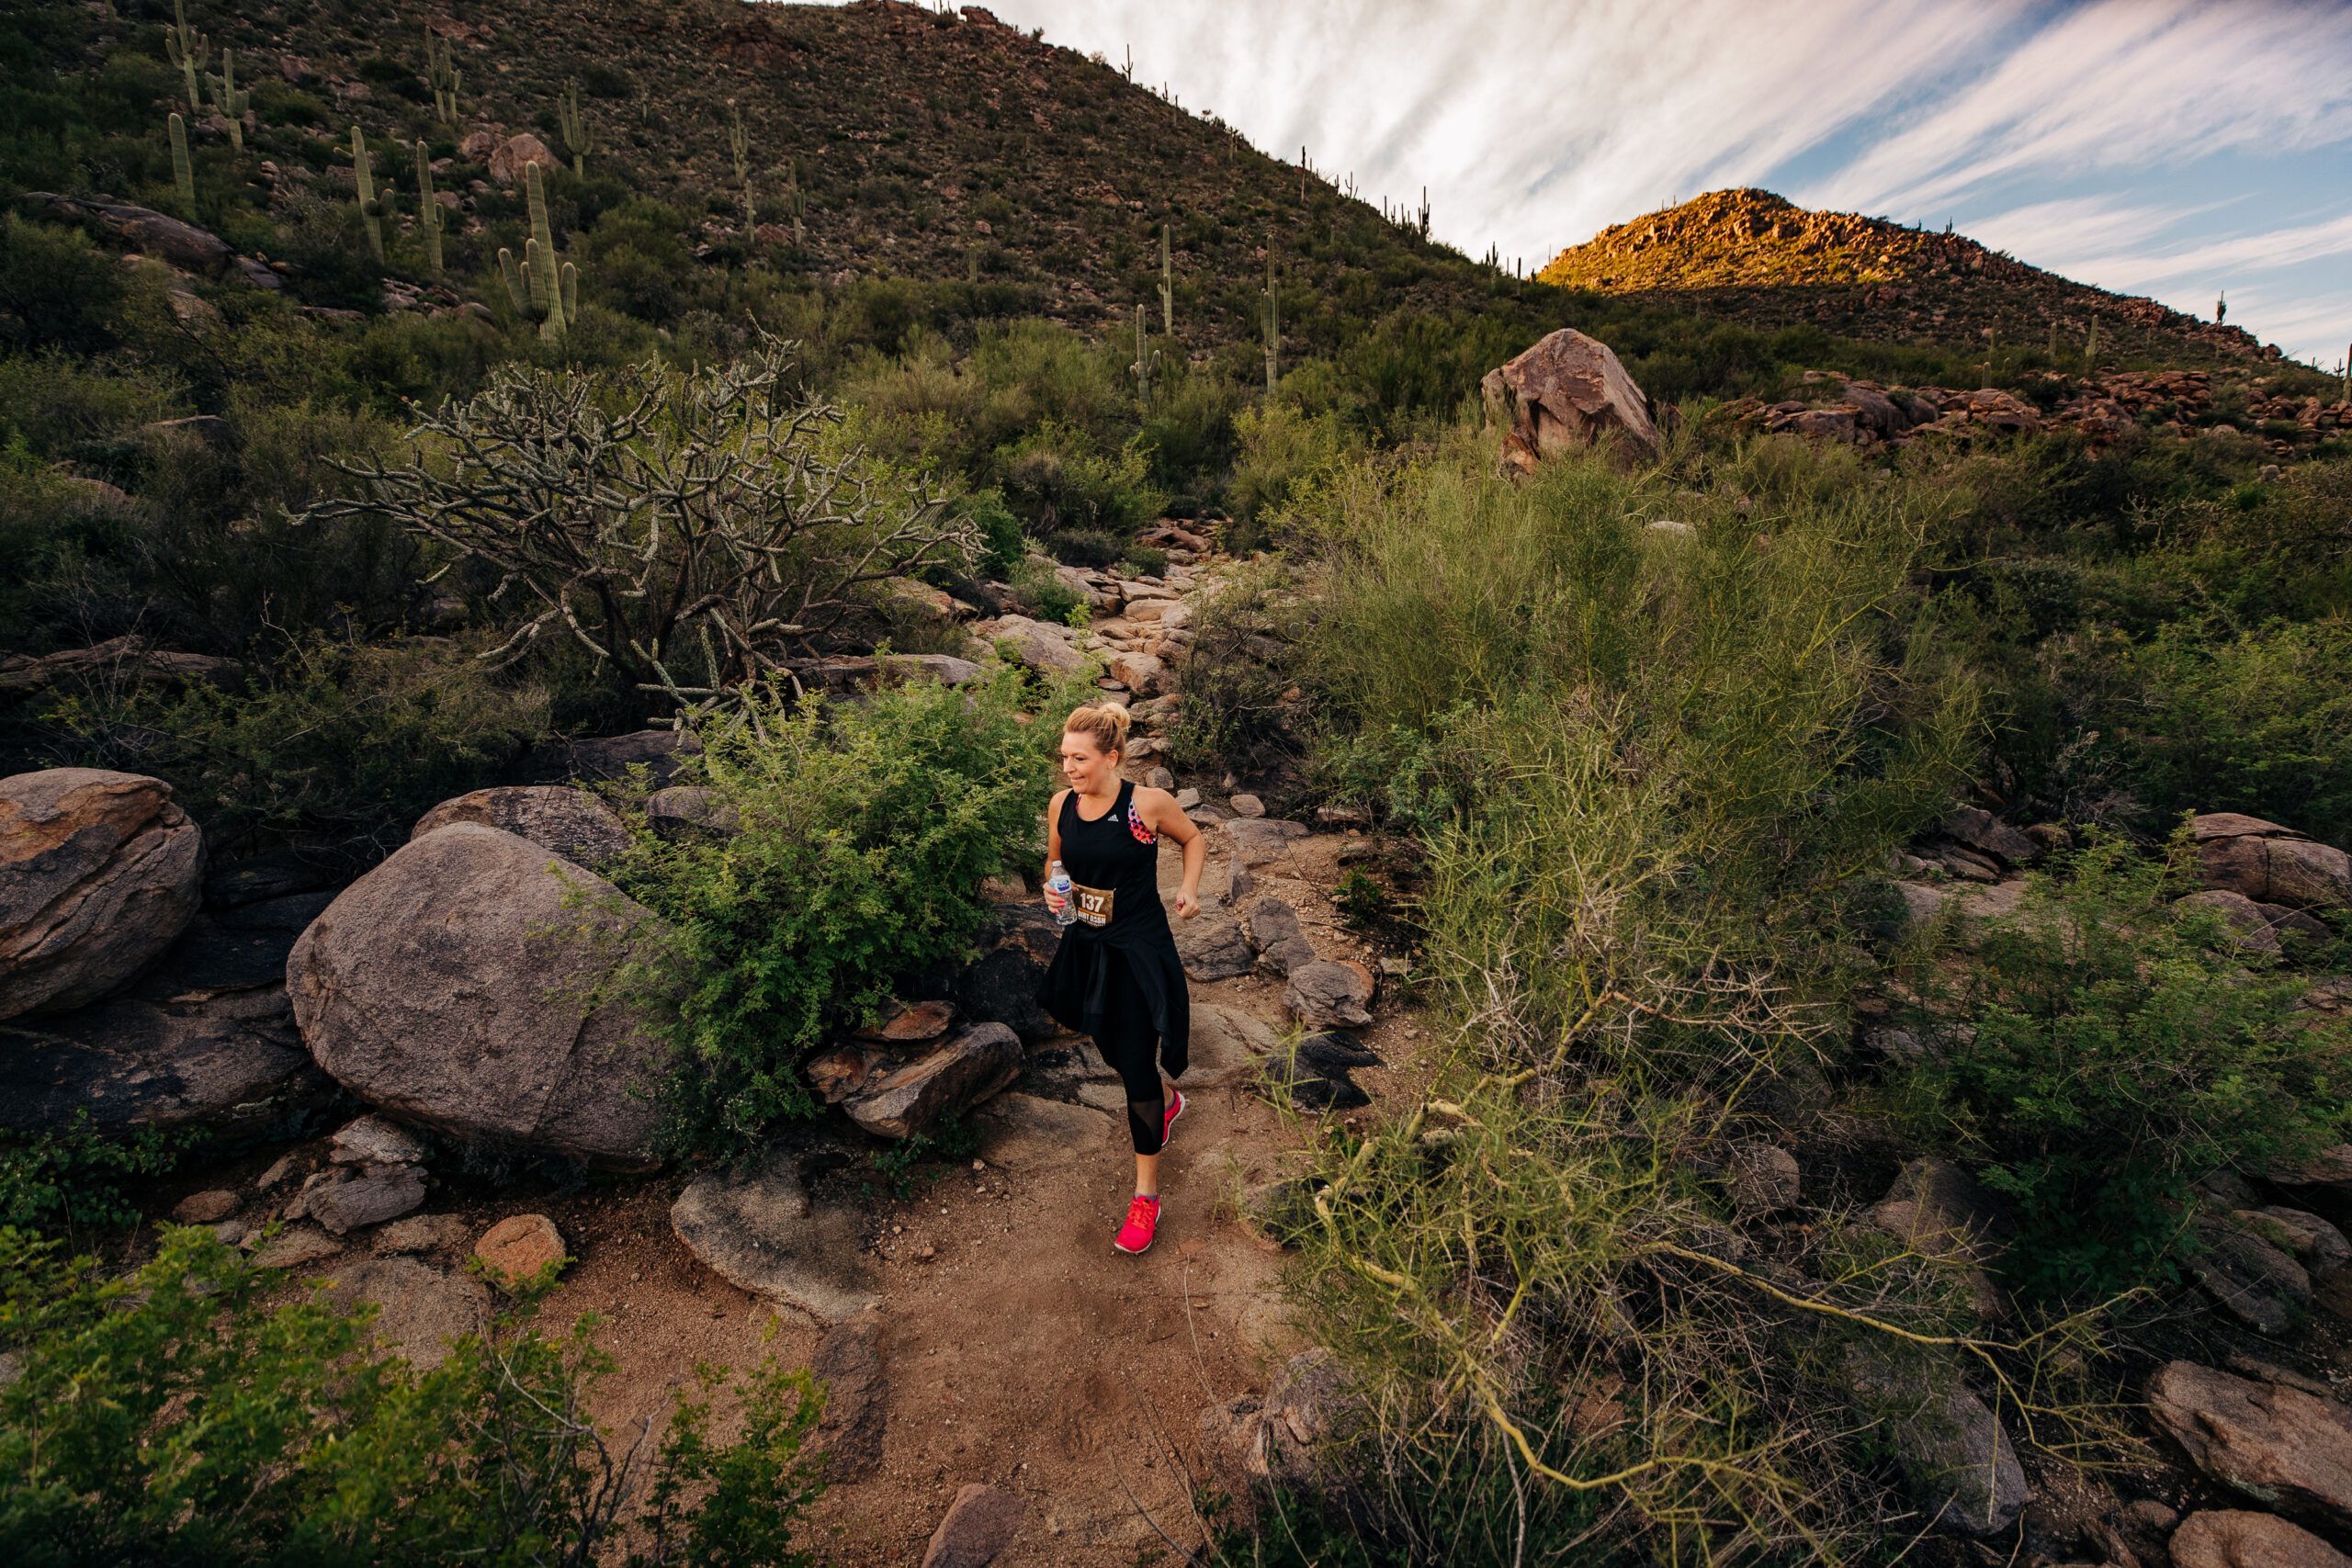 Female in black running suit running through a desert trail